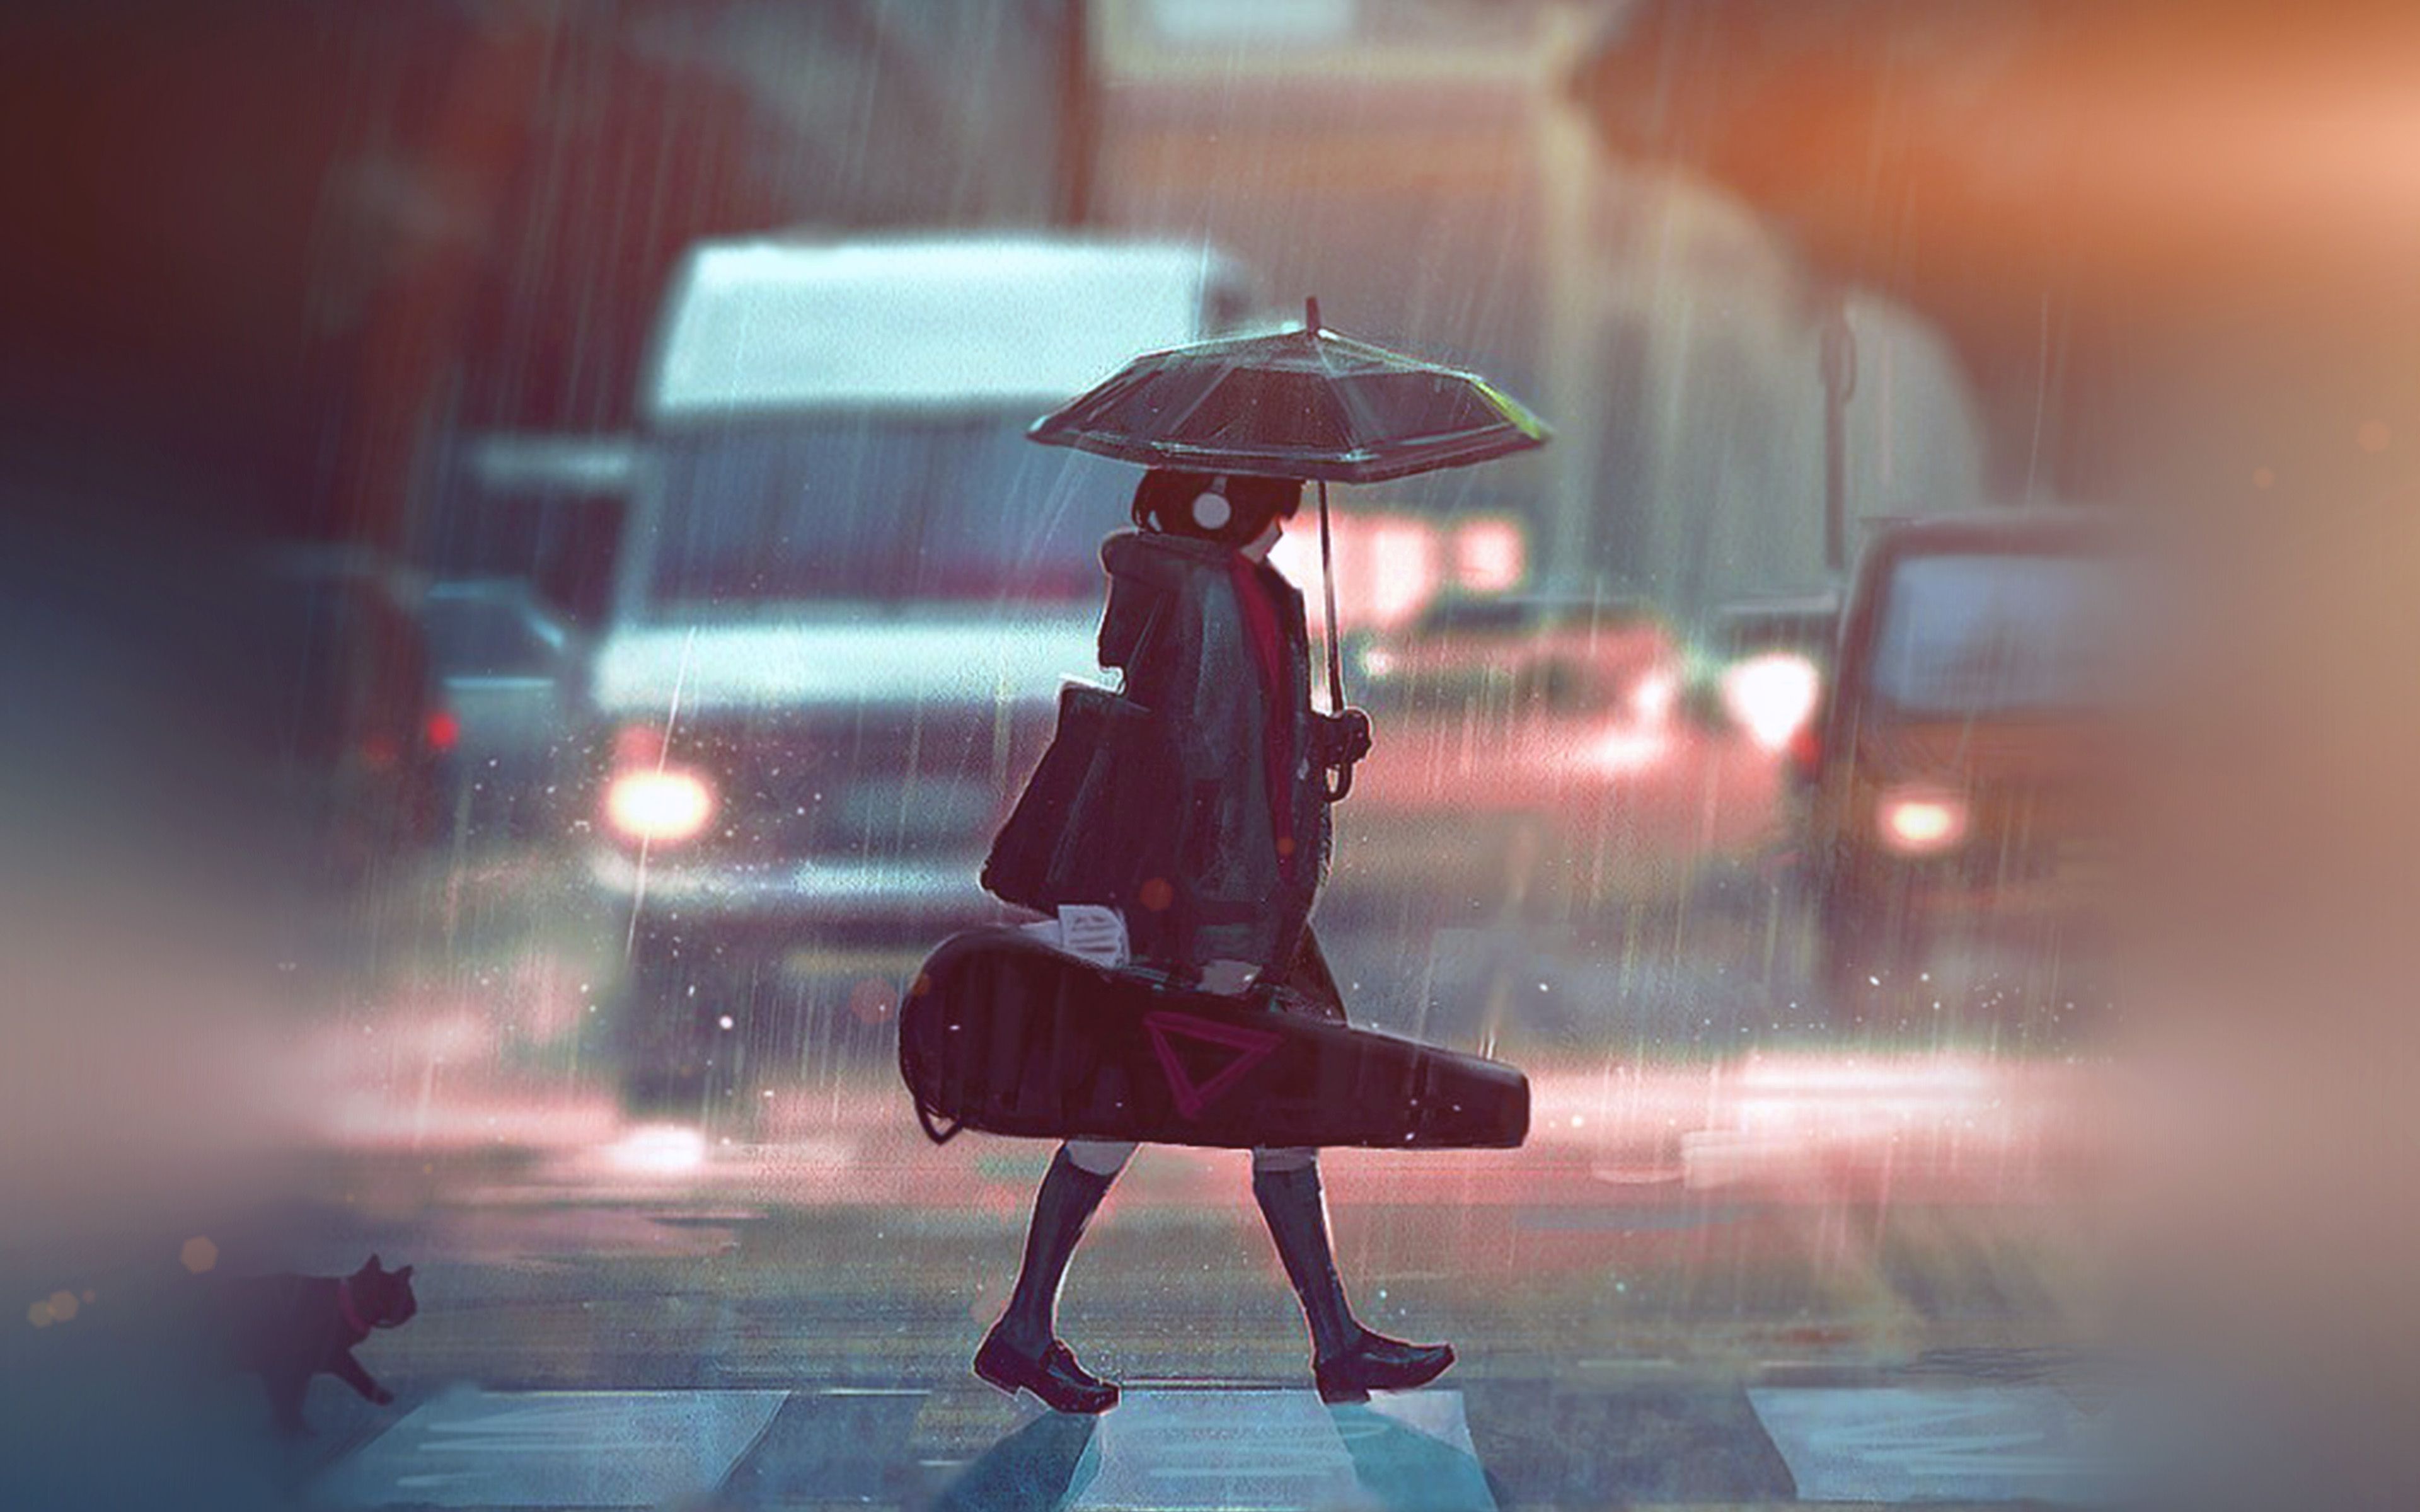 A woman with a guitar case and umbrella walks in the rain. - Rain